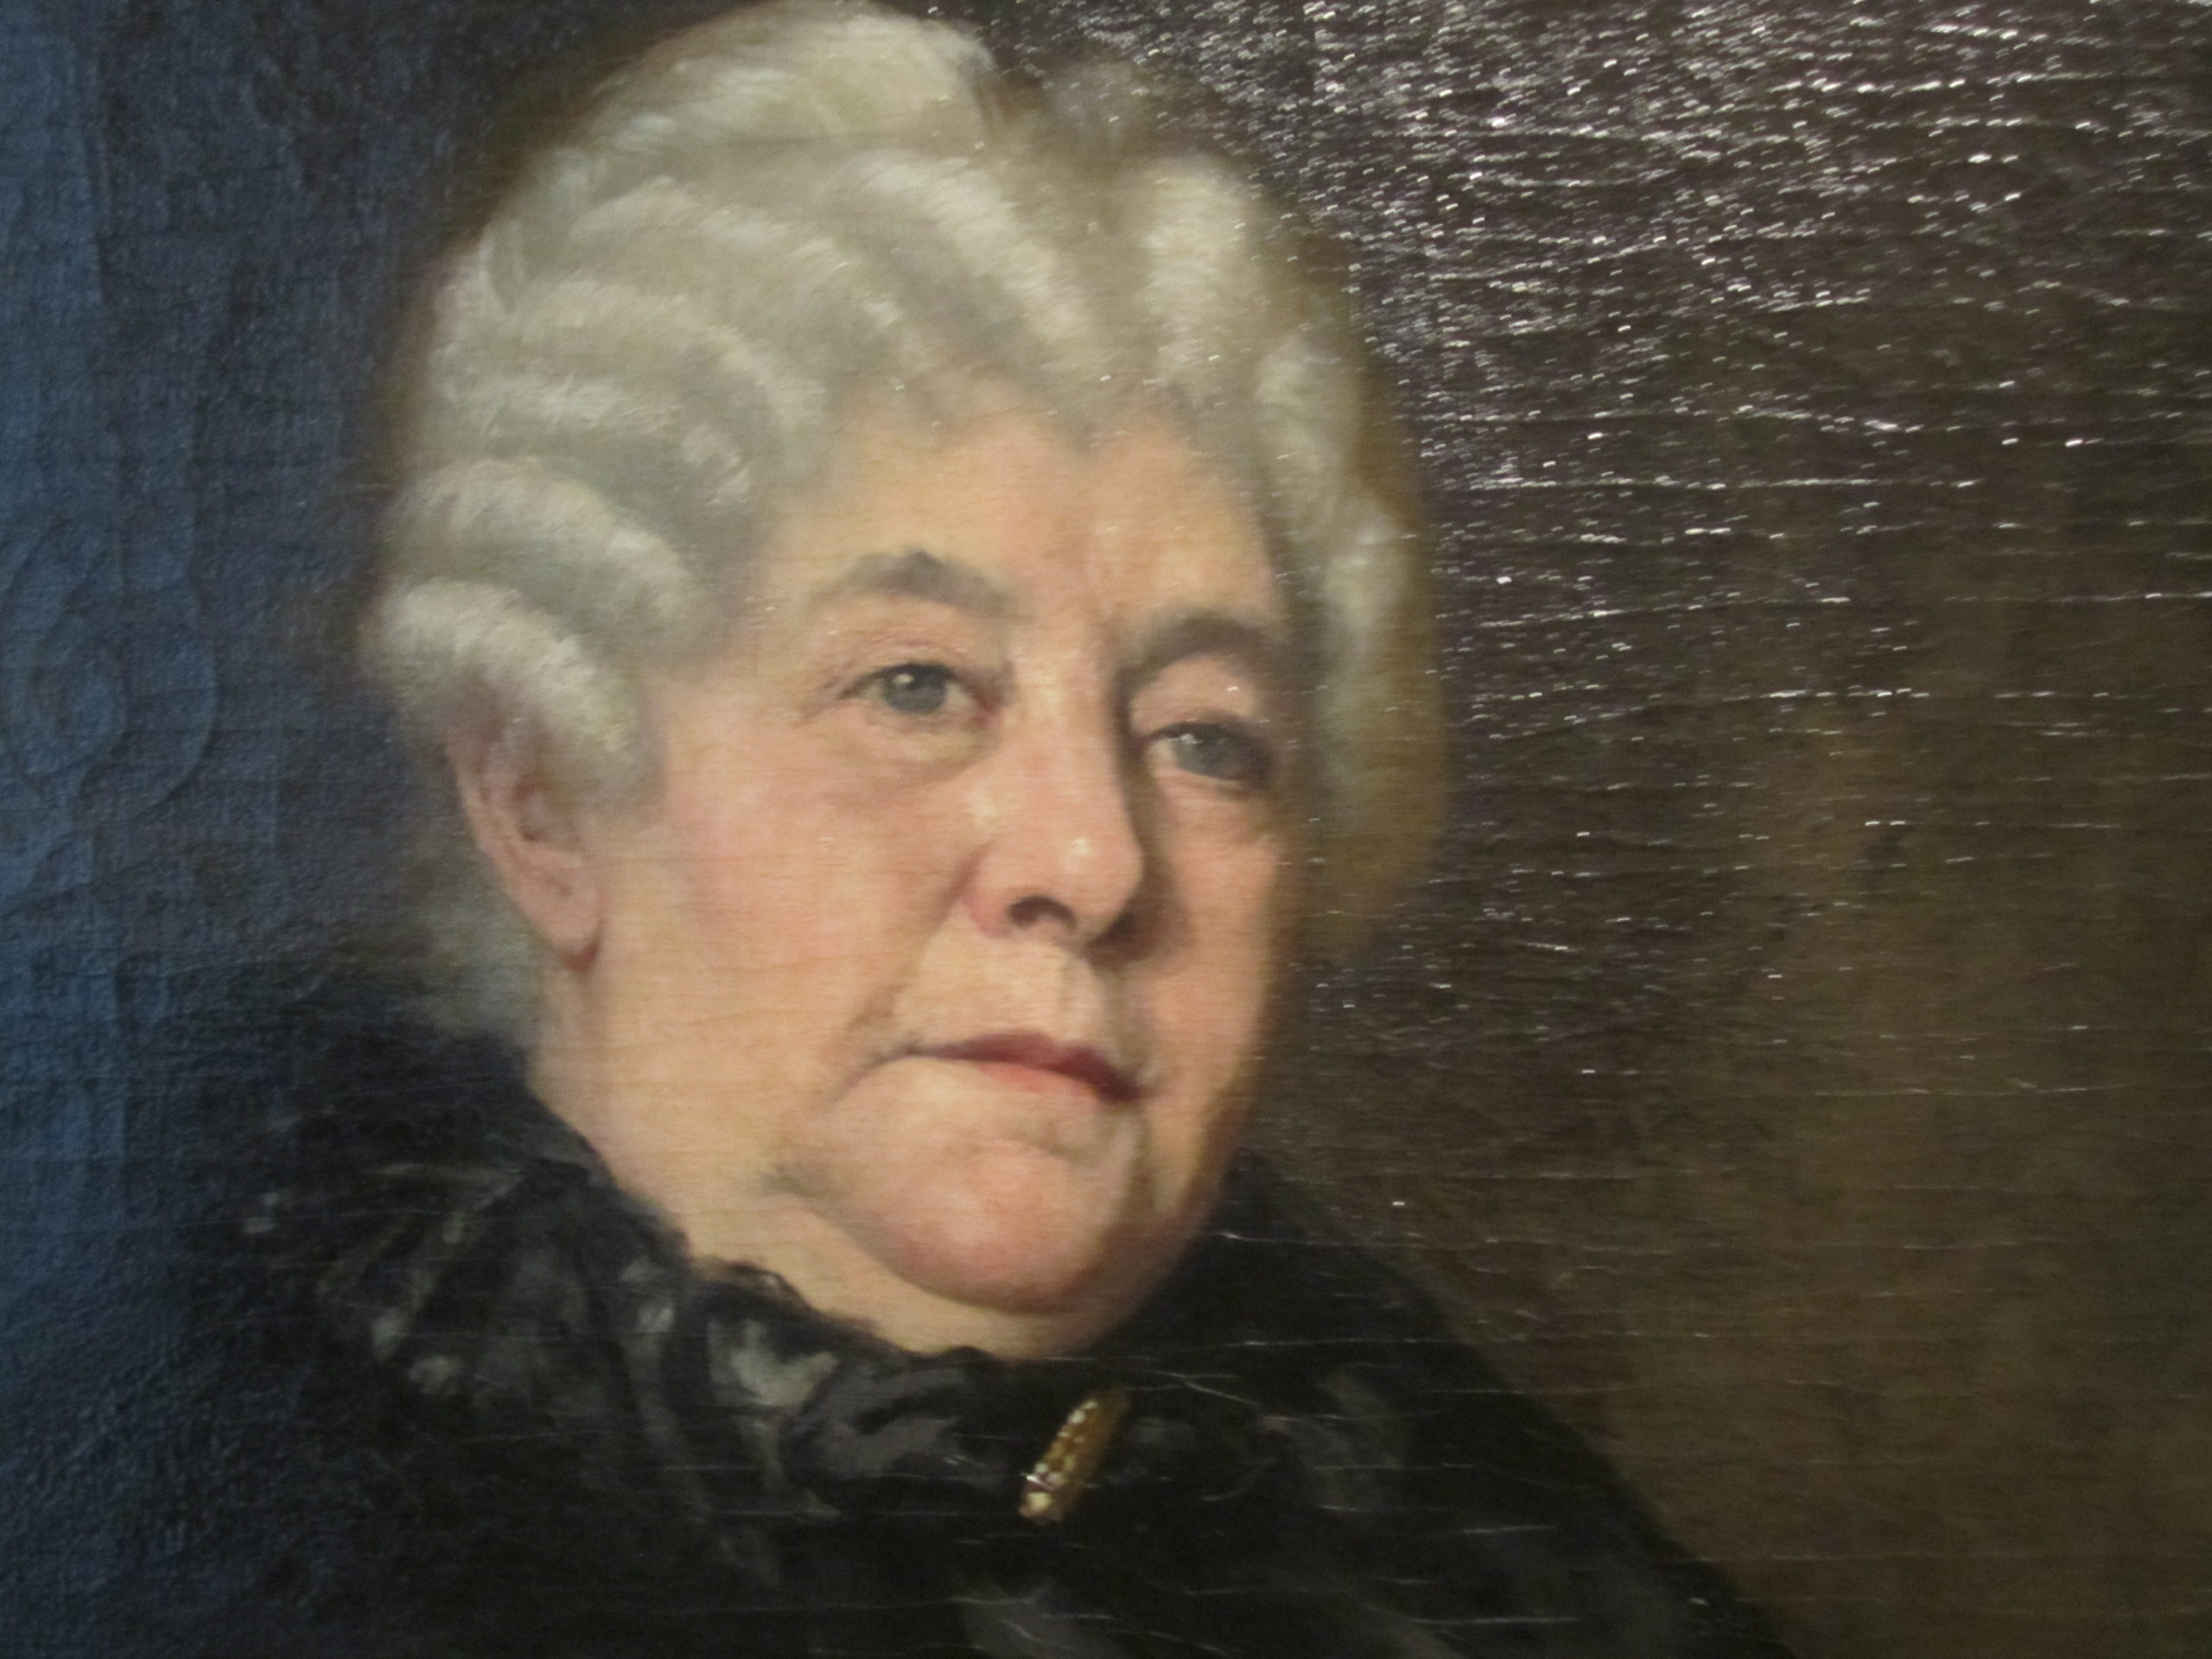 Elizabeth Cady Stanton At National Portrait Gallery IMG 4401